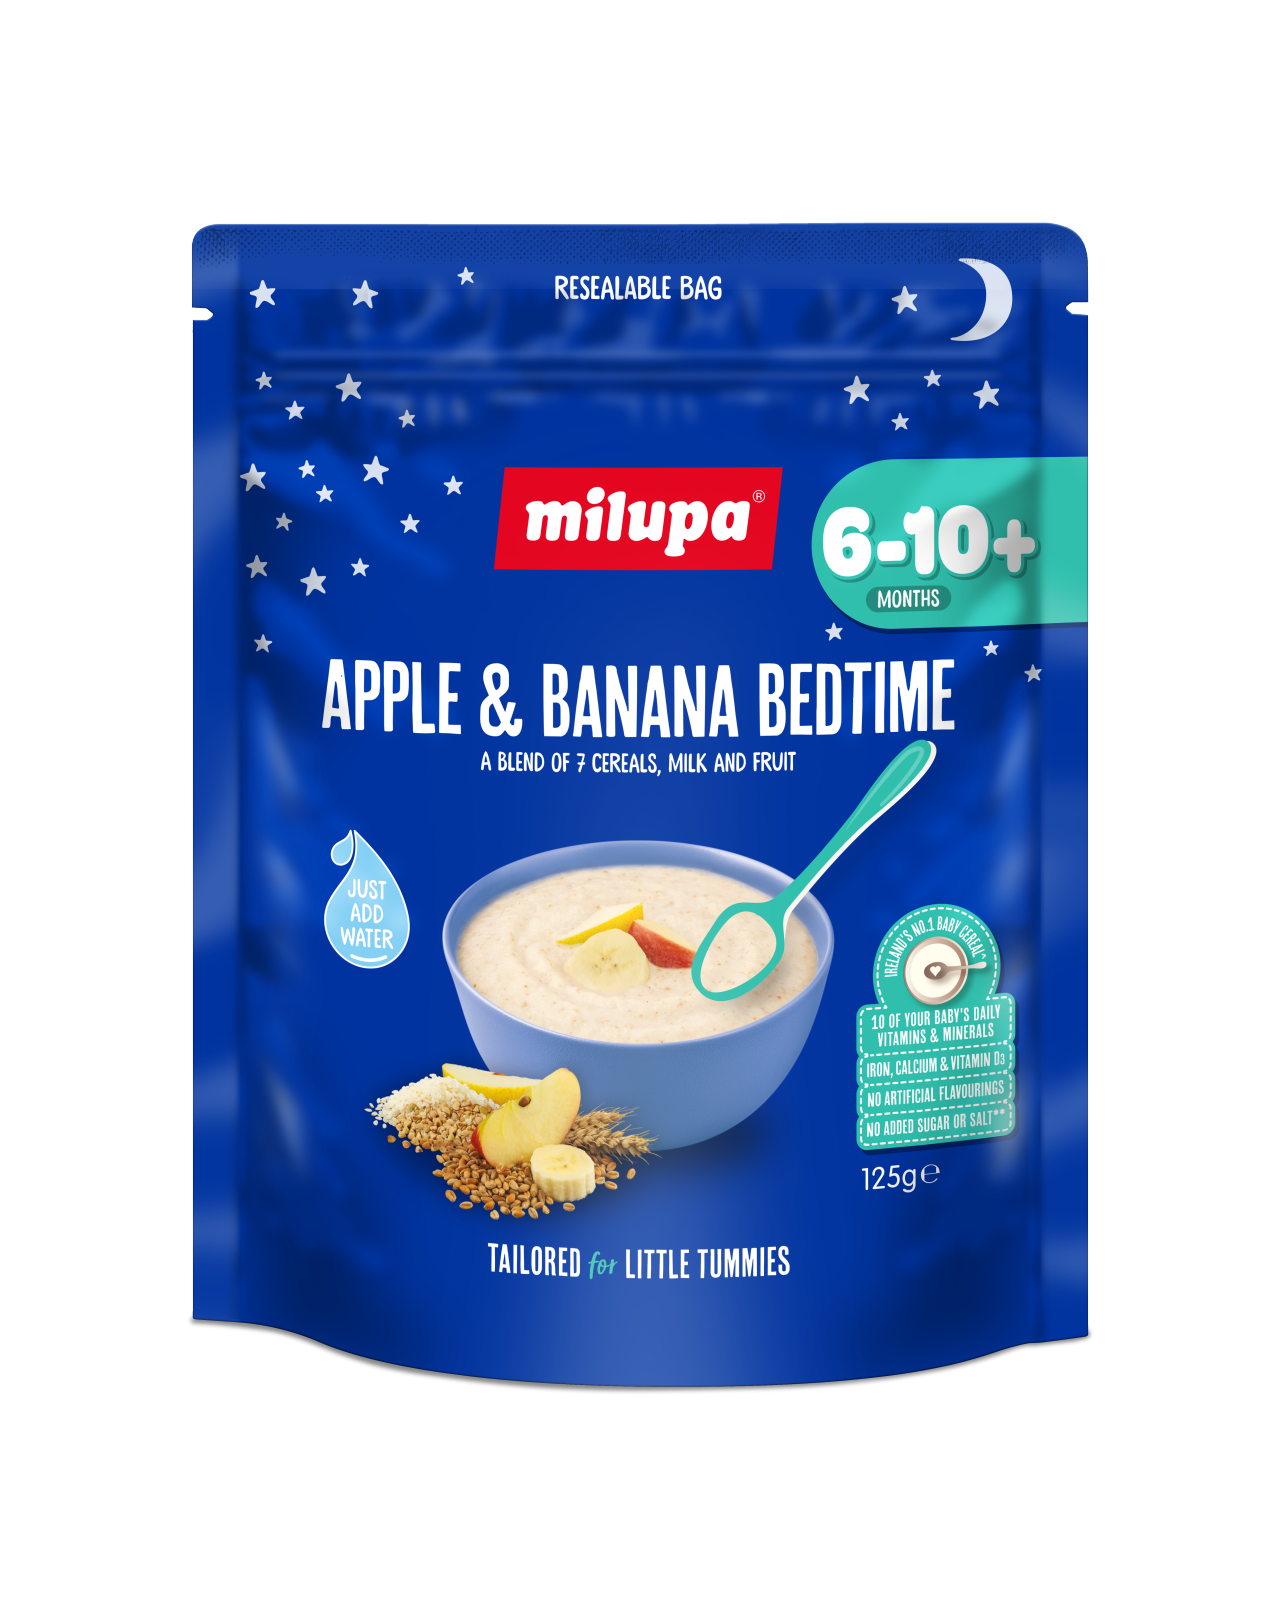 Apple & banana bedtime product image